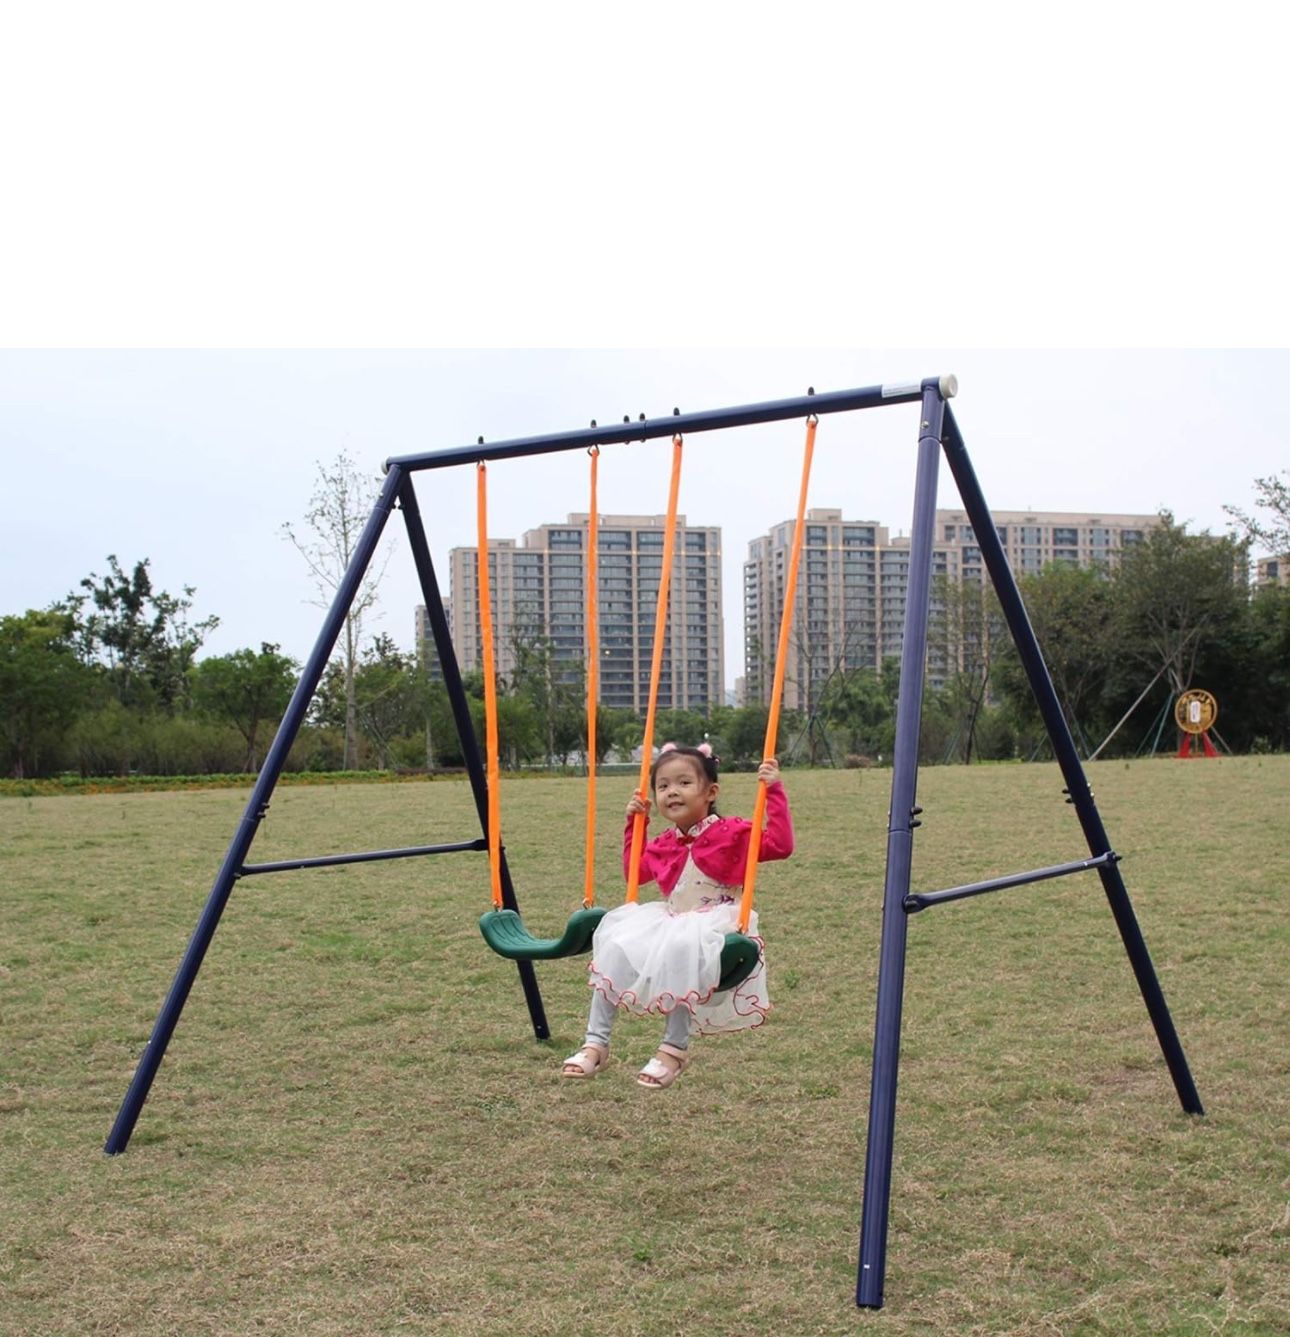 A-Frame Metal Swing Set Outdoor Backyard Playground Swing Set for Kids, Toddlers (Two Seats Swing Set)